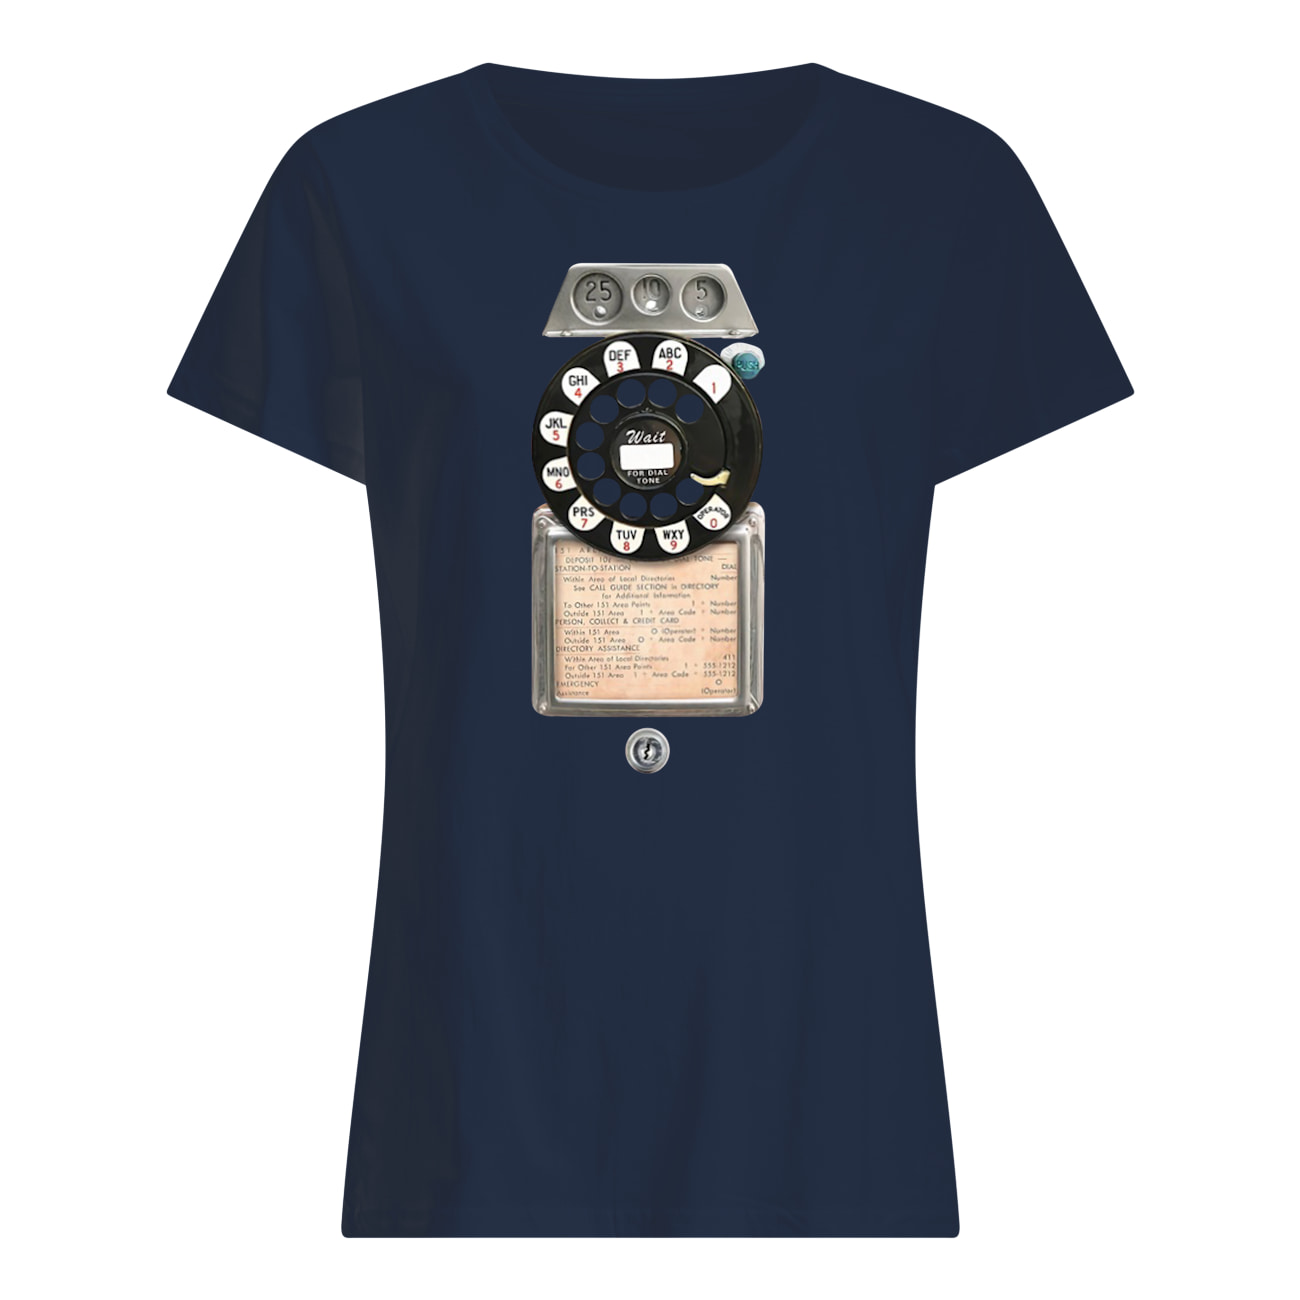 Retro rotary phone dial on graphic womens shirt